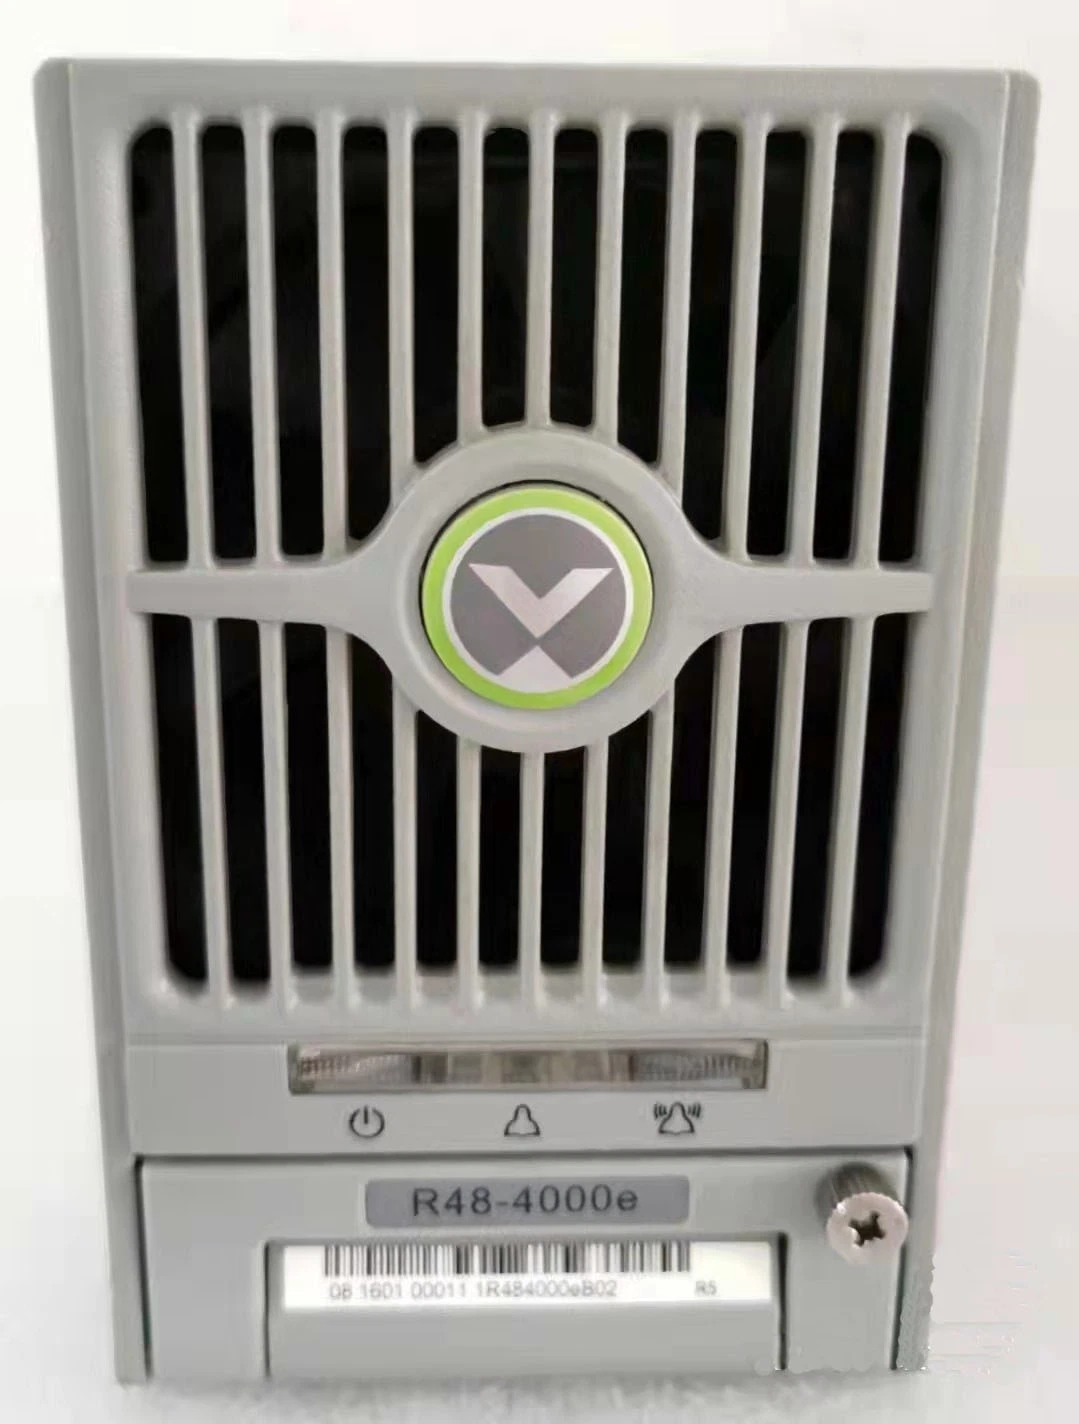 Emerson Vertiv48-4000R e a 48V 4000W el módulo de alimentación rectificador